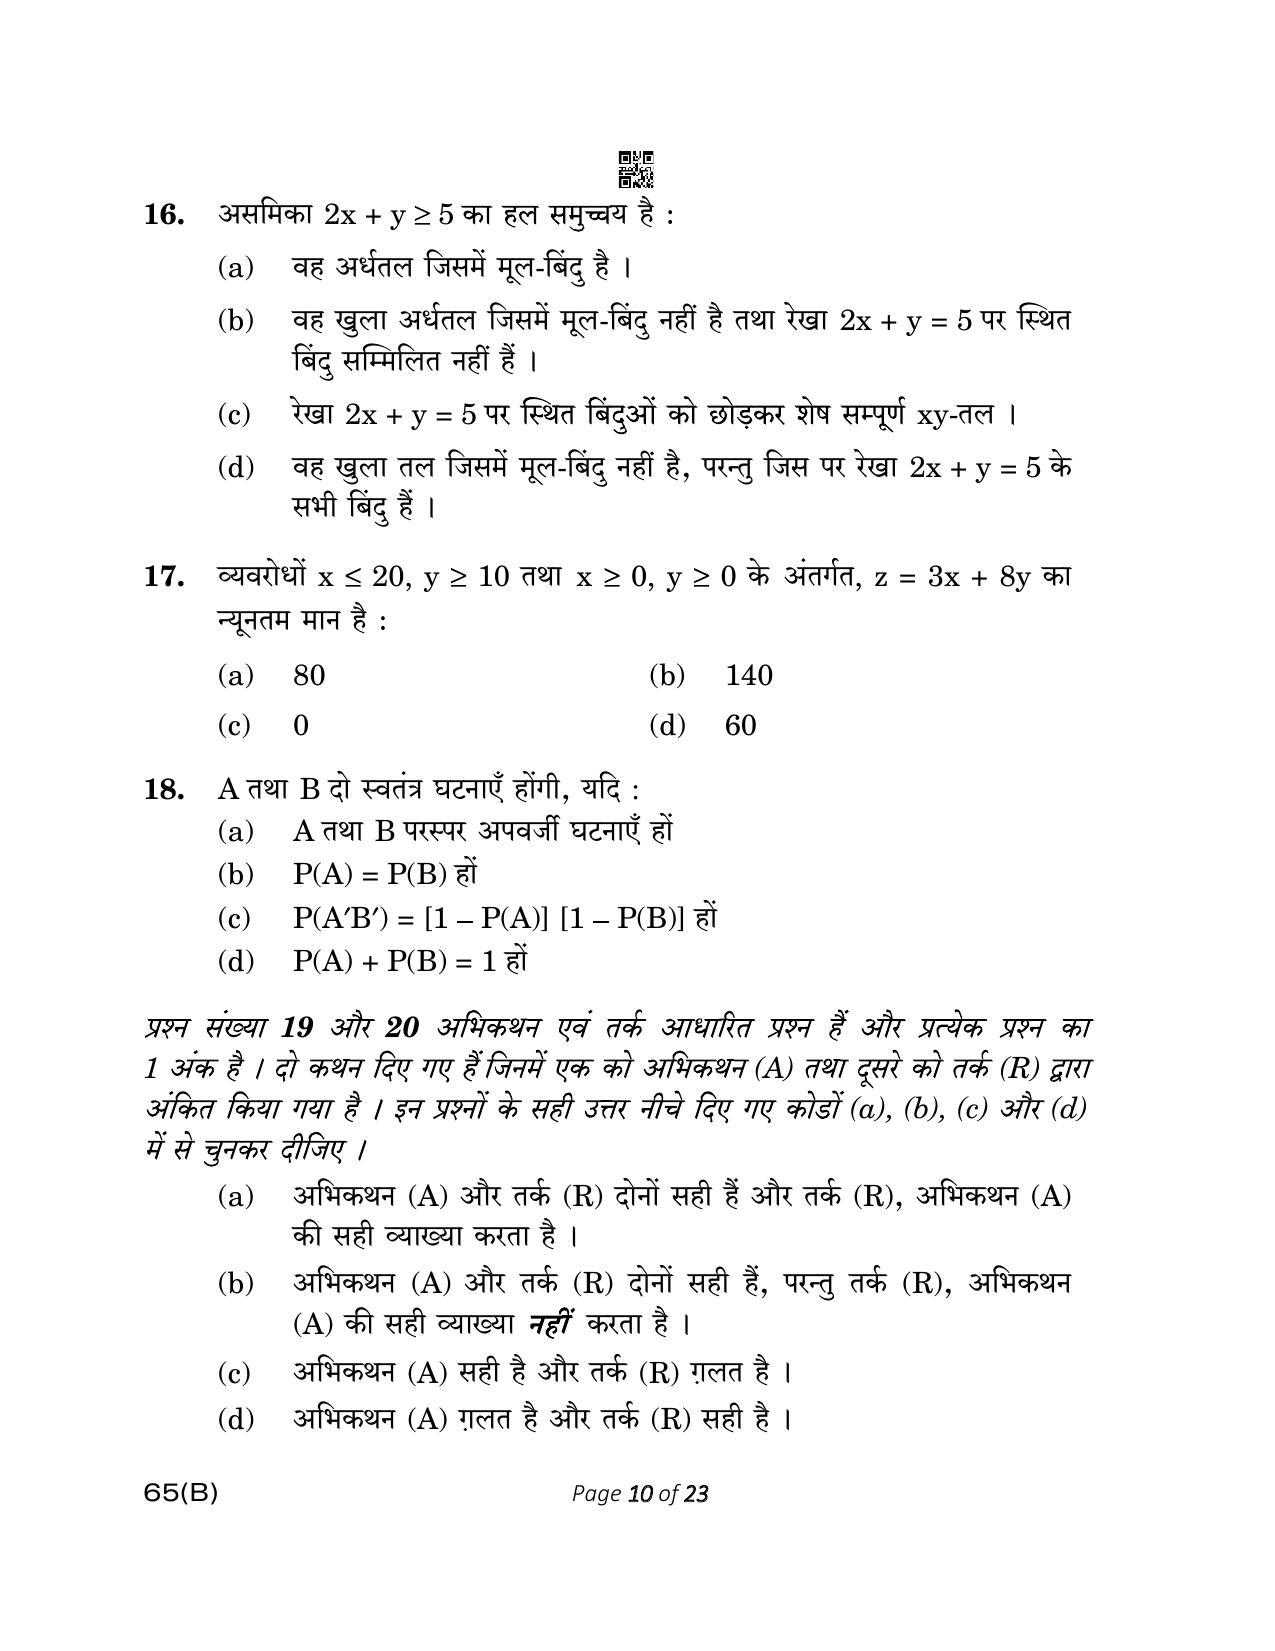 CBSE Class 12 65(B) MATHEMATICS FOR VI 2023 Question Paper - Page 10